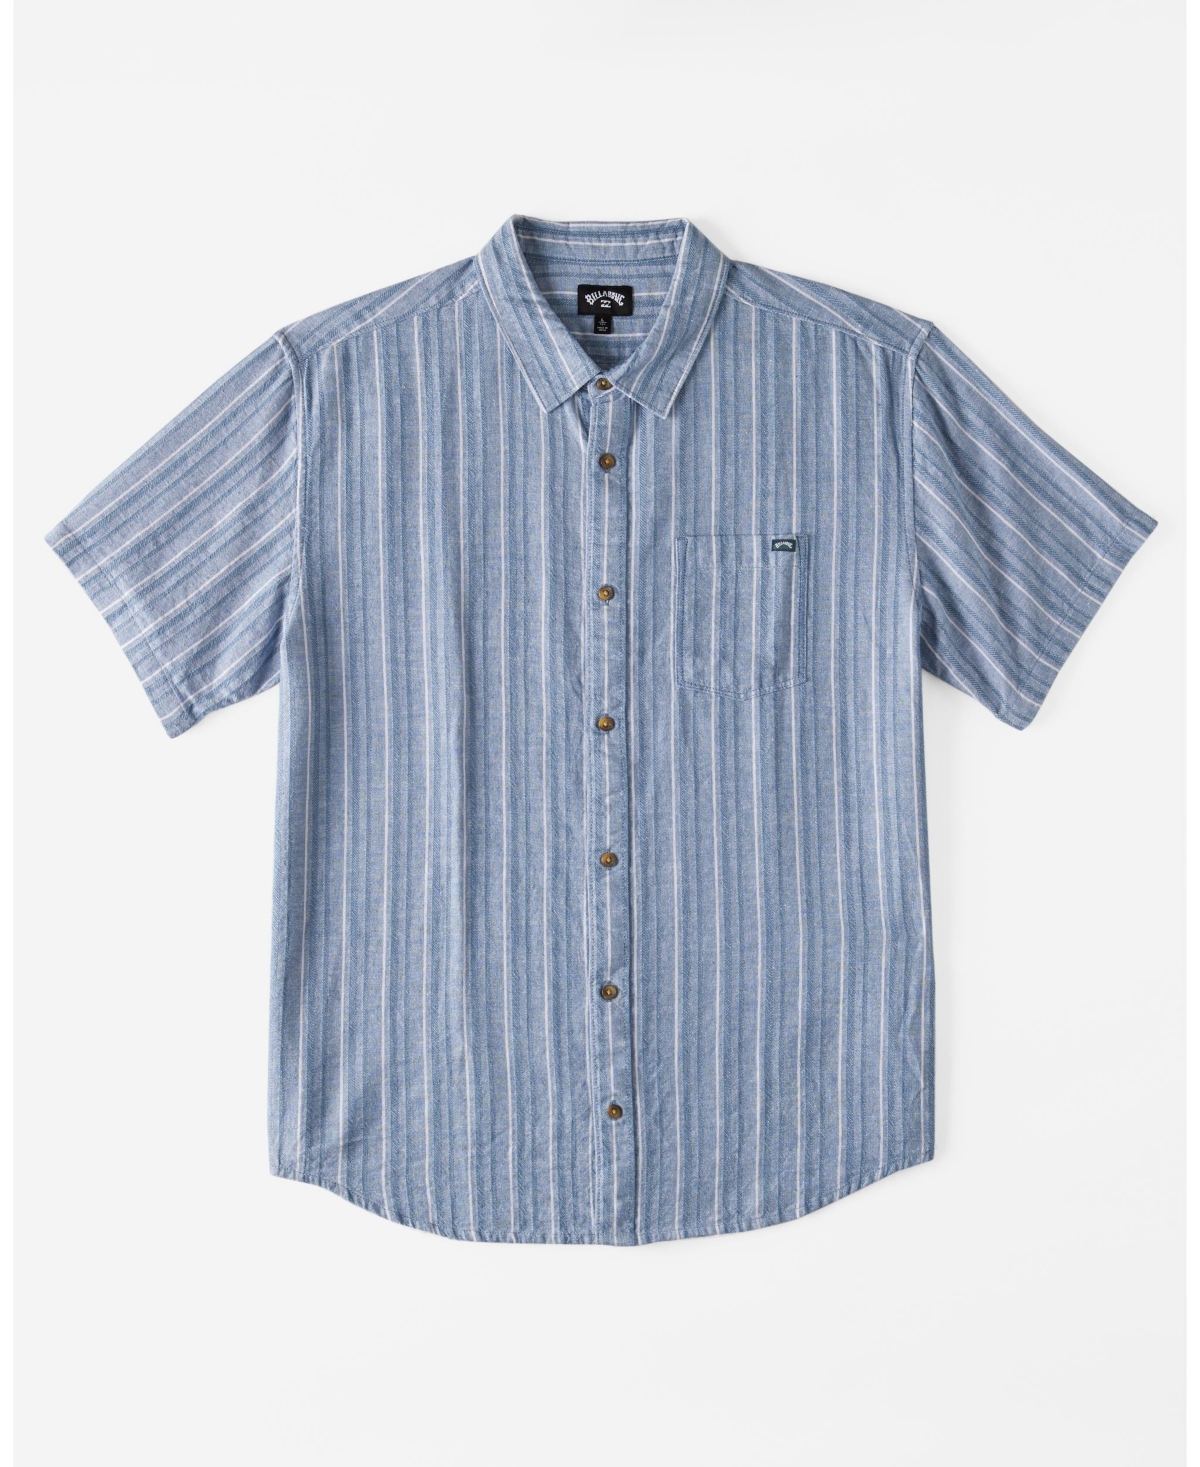 Men's All Day Stripe Short Sleeve Shirt - Vintage Indigo